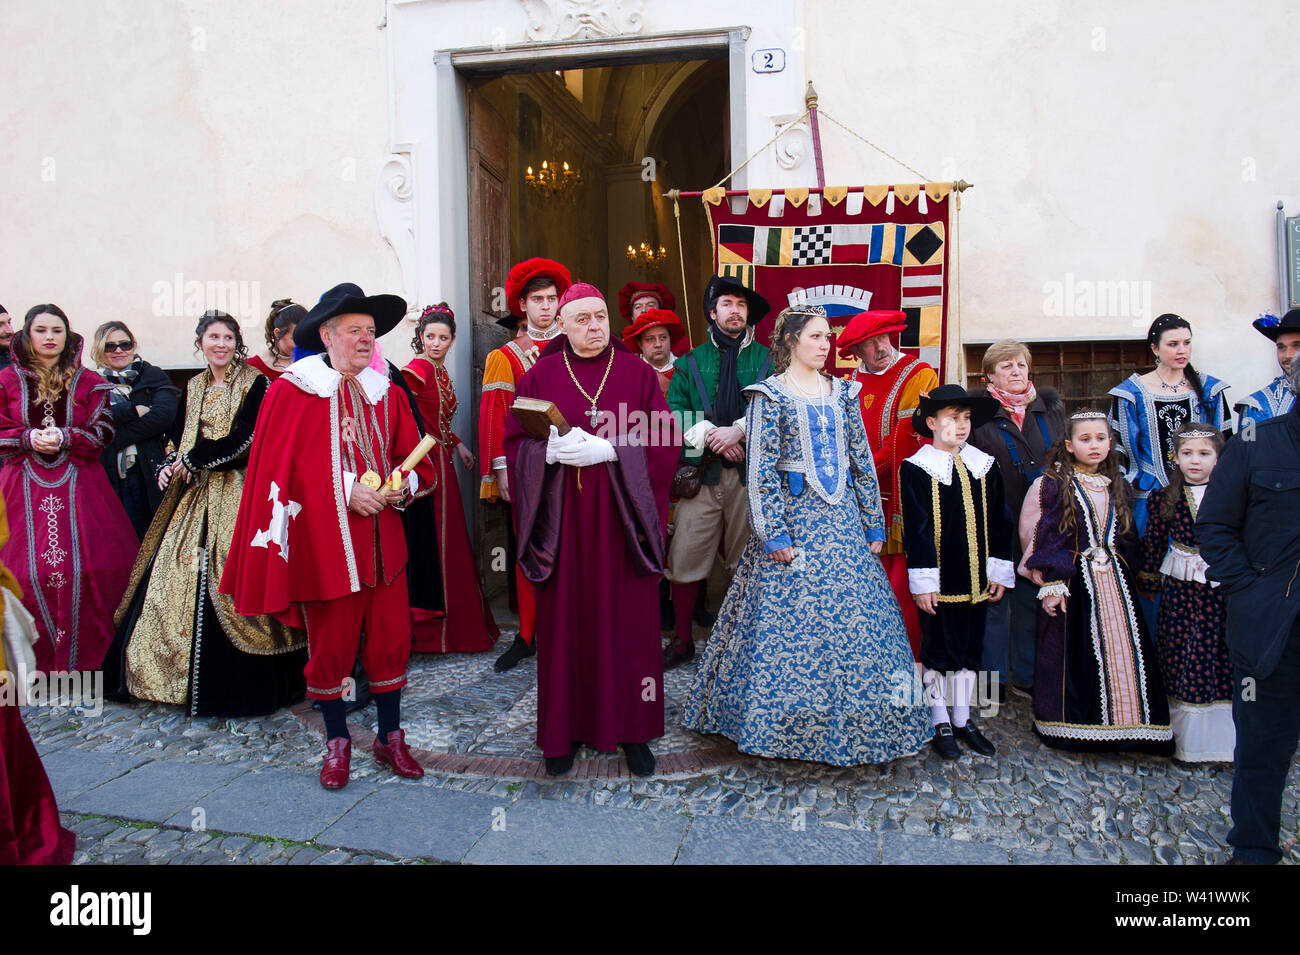 Italy, Liguria, Imperia, Arma di Taggia, historical reenactment 500 figures in costume of the era parade through the historic center. Stock Photo